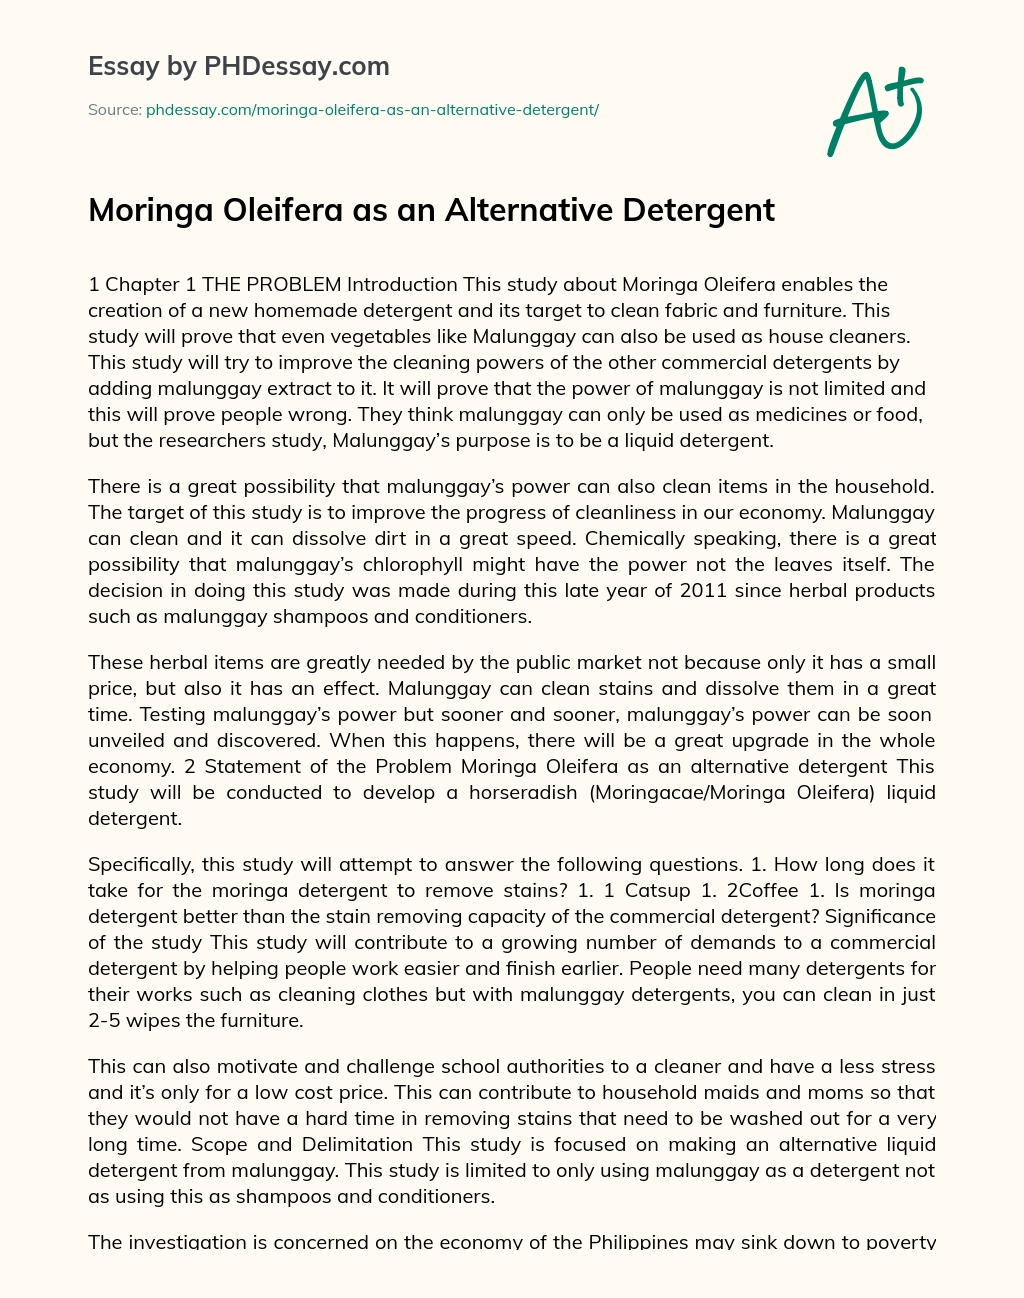 Moringa Oleifera as an Alternative Detergent essay